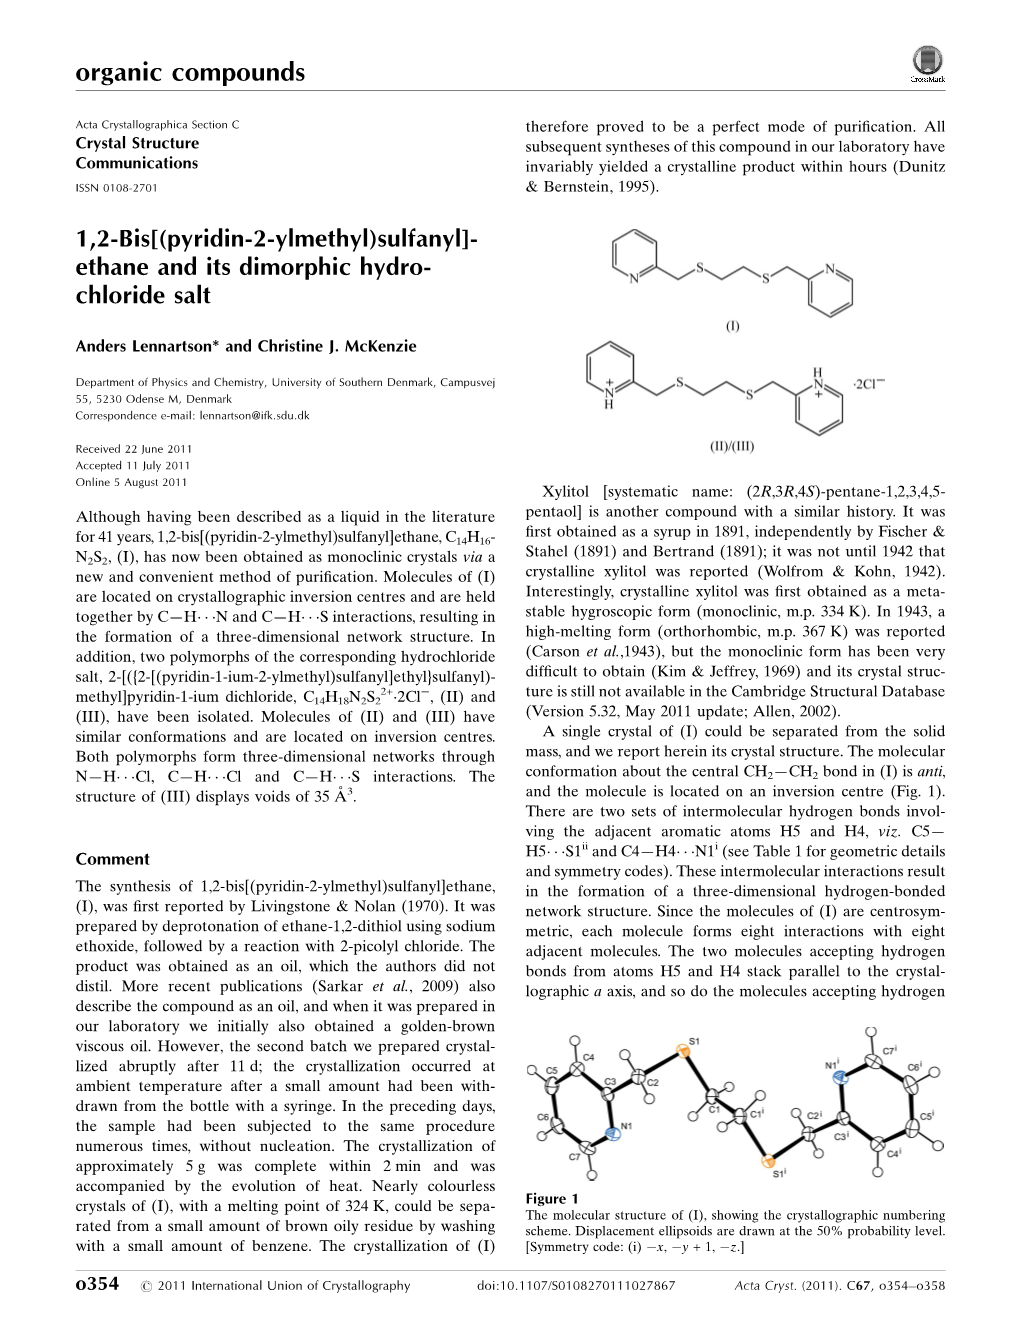 1,2-Bis[(Pyridin-2-Ylmethyl)Sulfanyl]- Ethane and Its Dimorphic Hydro- Chloride Salt